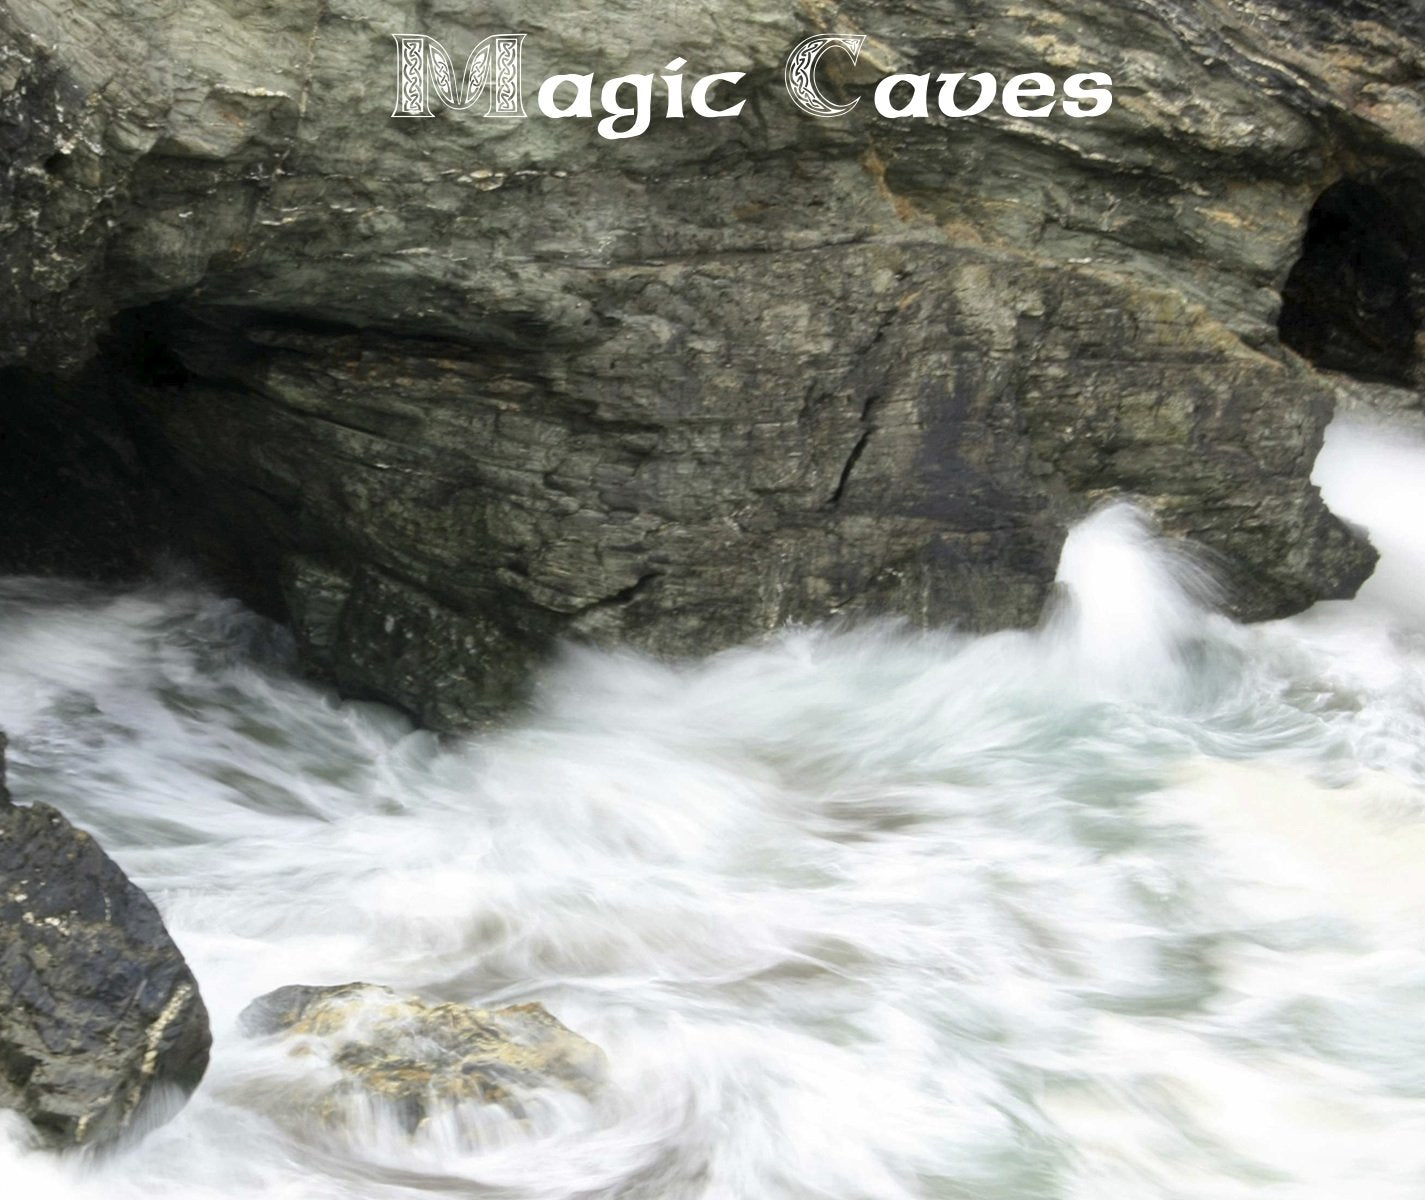 Magical Places Of Britain Book - Magic Caves - Viking Dragon Books